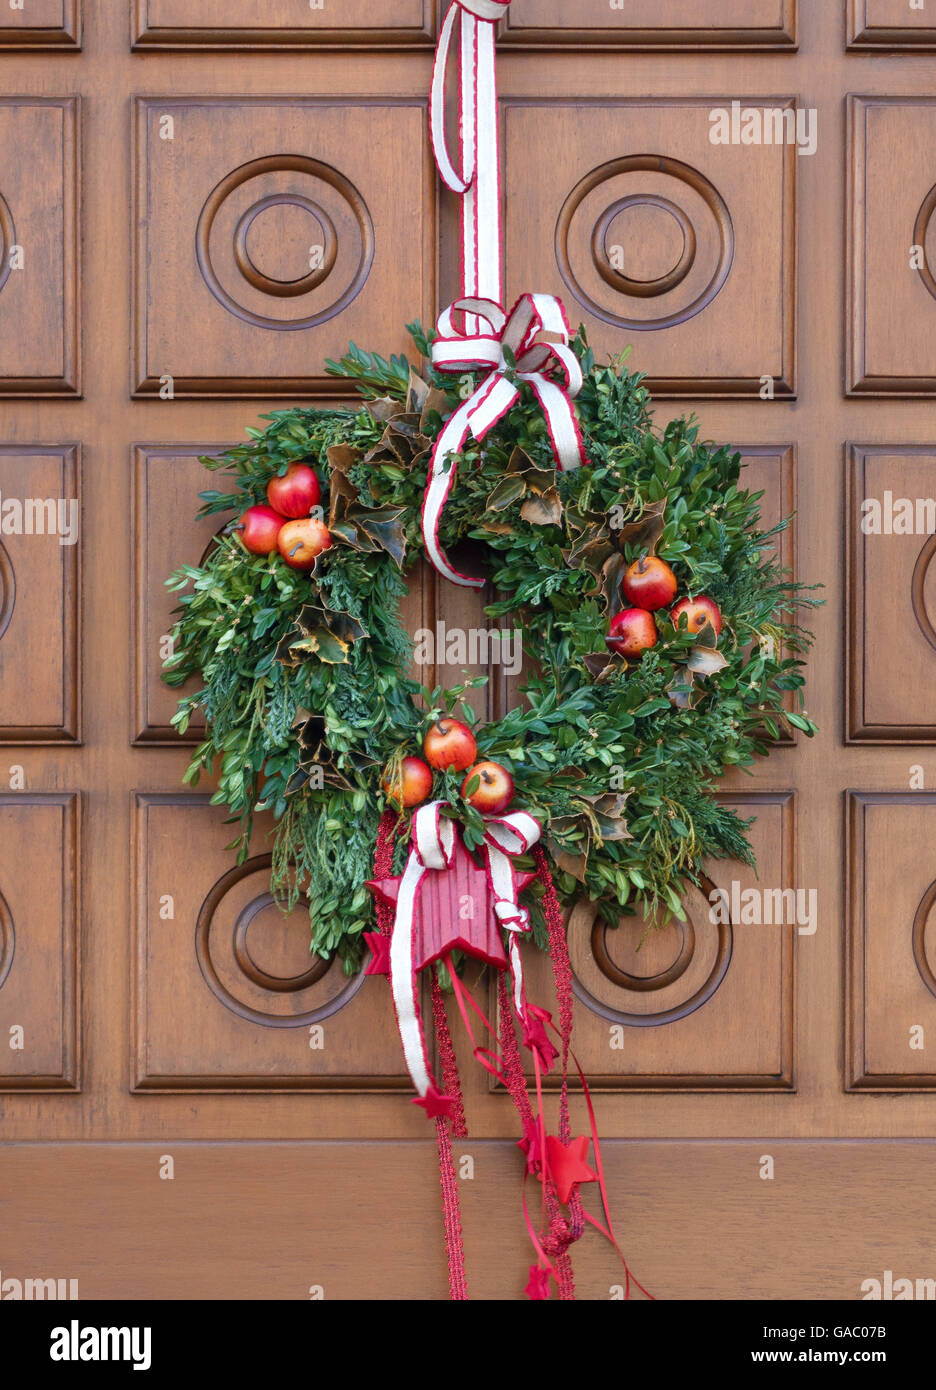 Christmassy door wreath Stock Photo